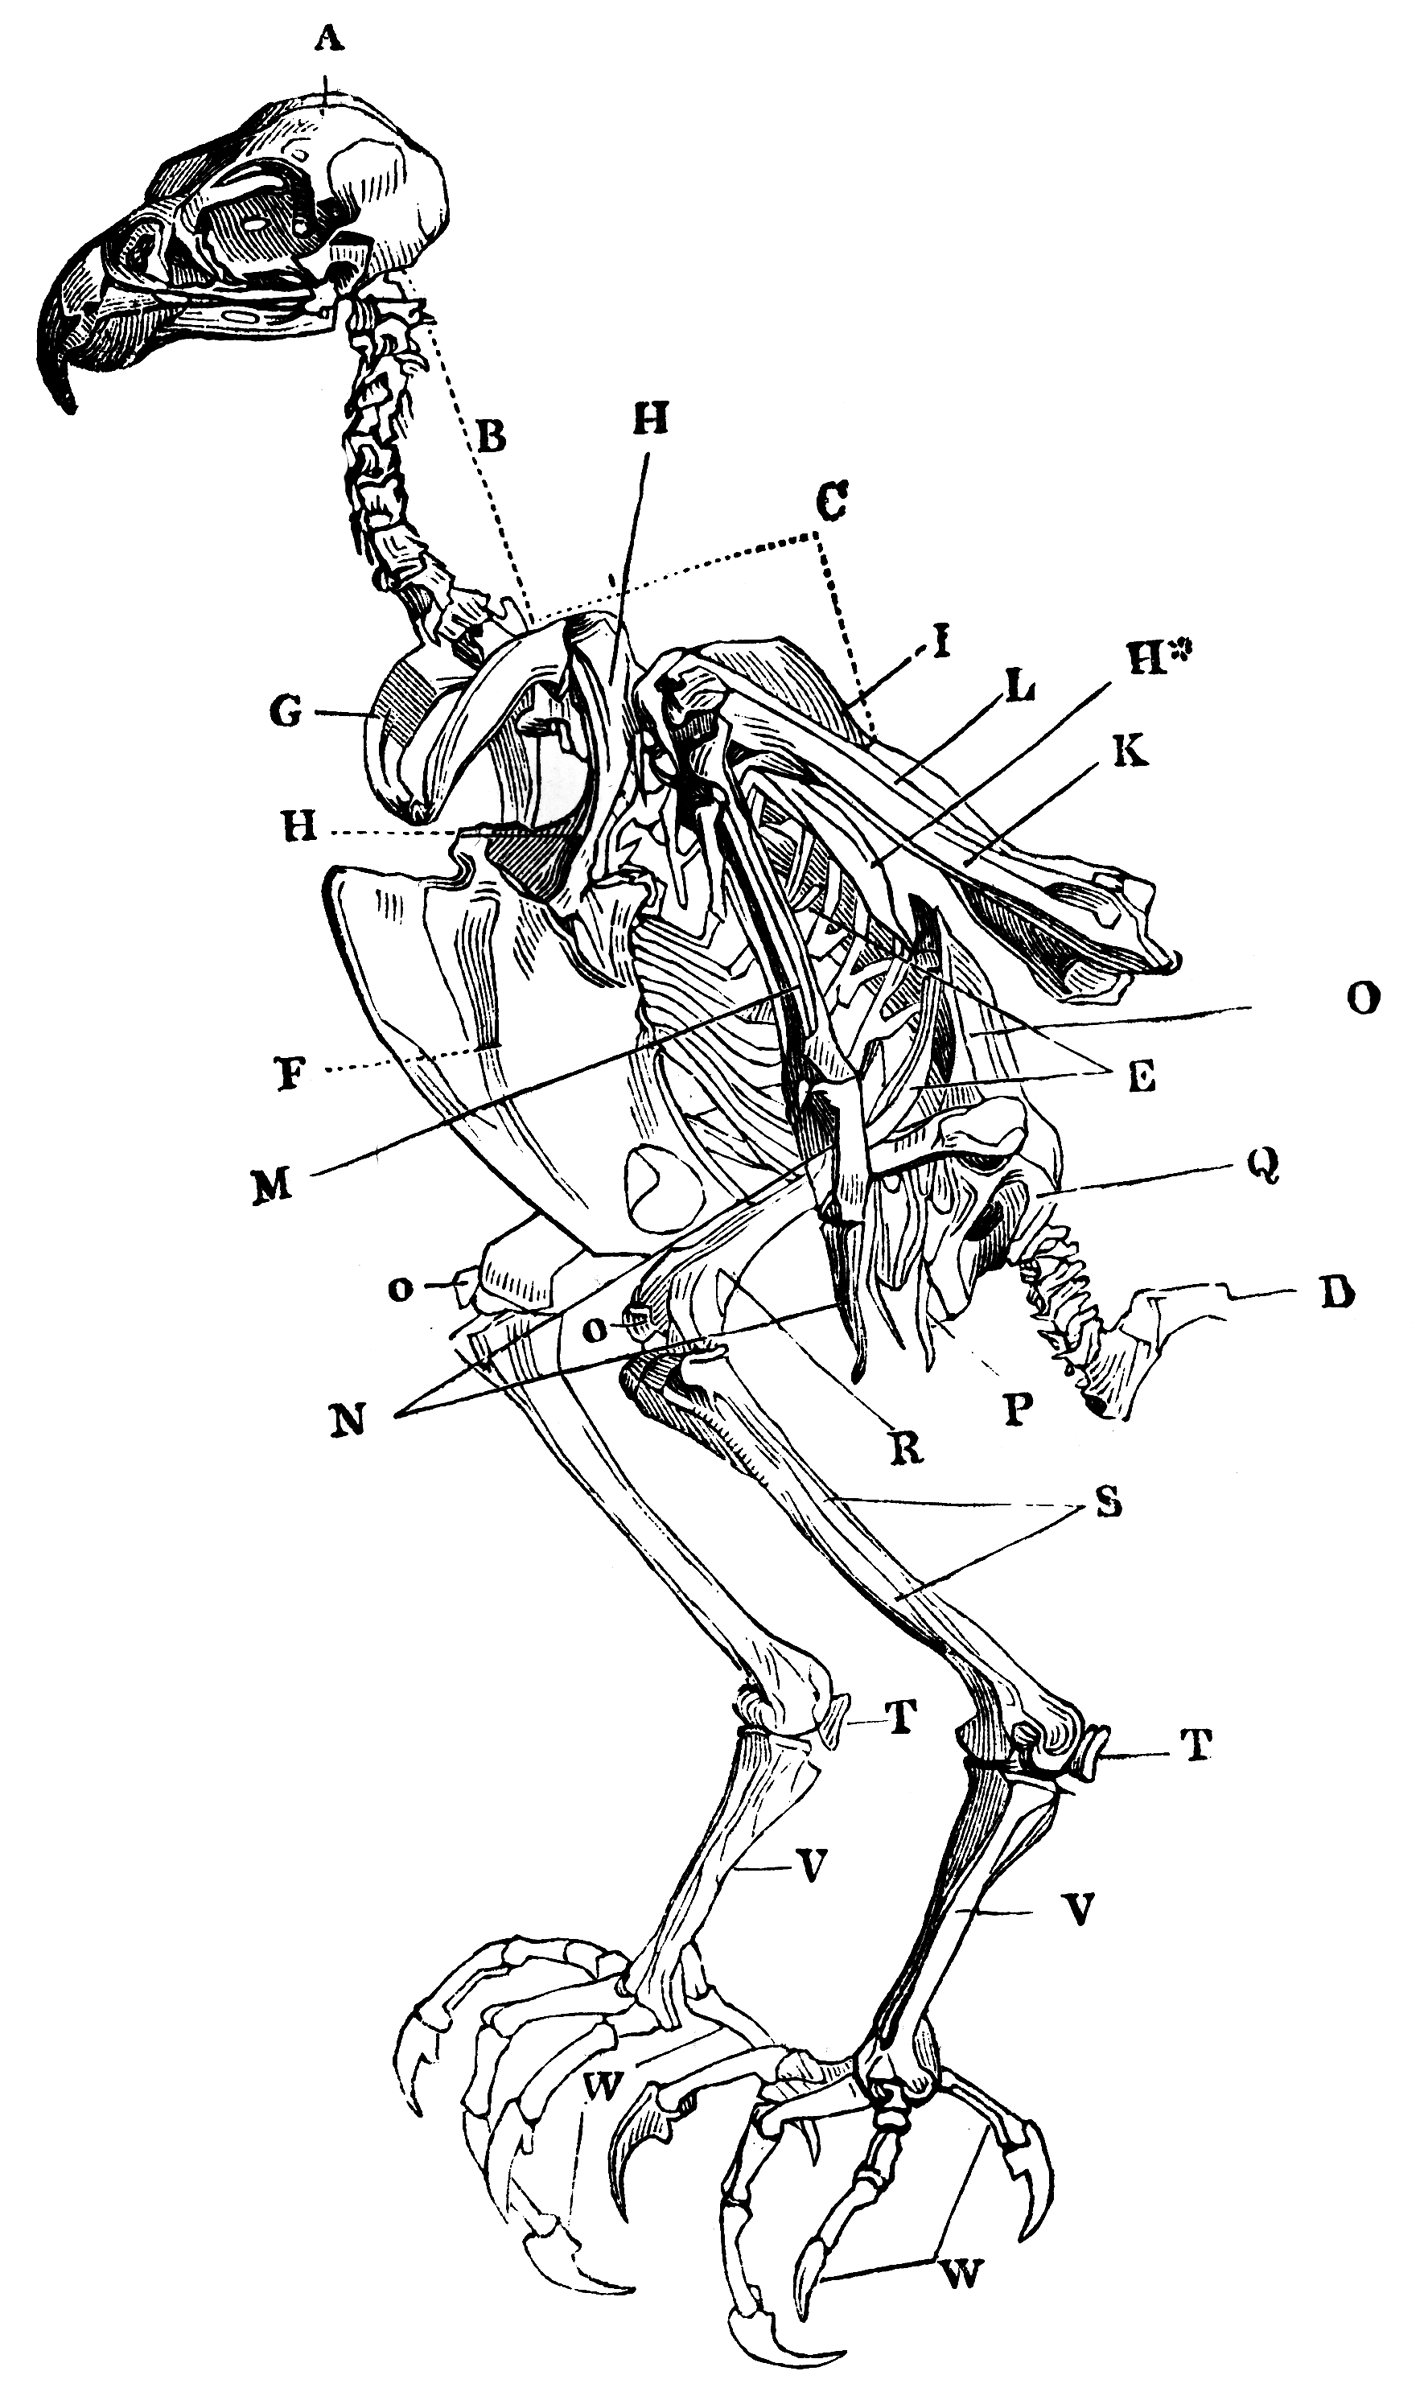 Skeleton of a Sparrowhawk | ClipArt ETC